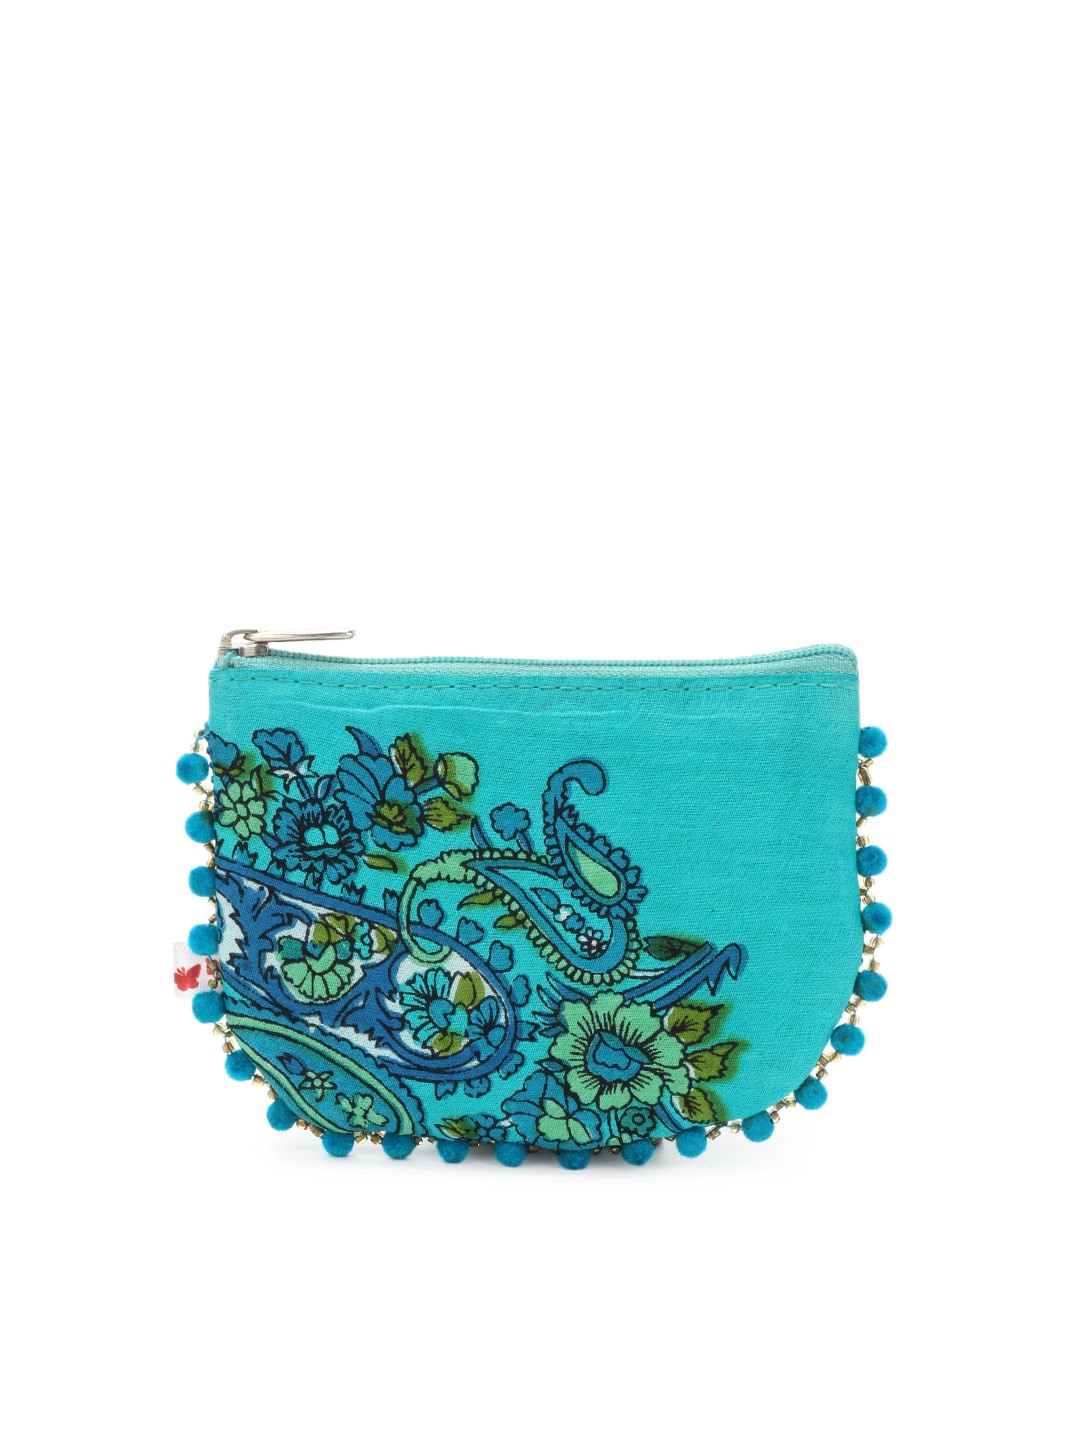 Paridhan Women Turquoise Blue Lace Coin Pouch Wallet